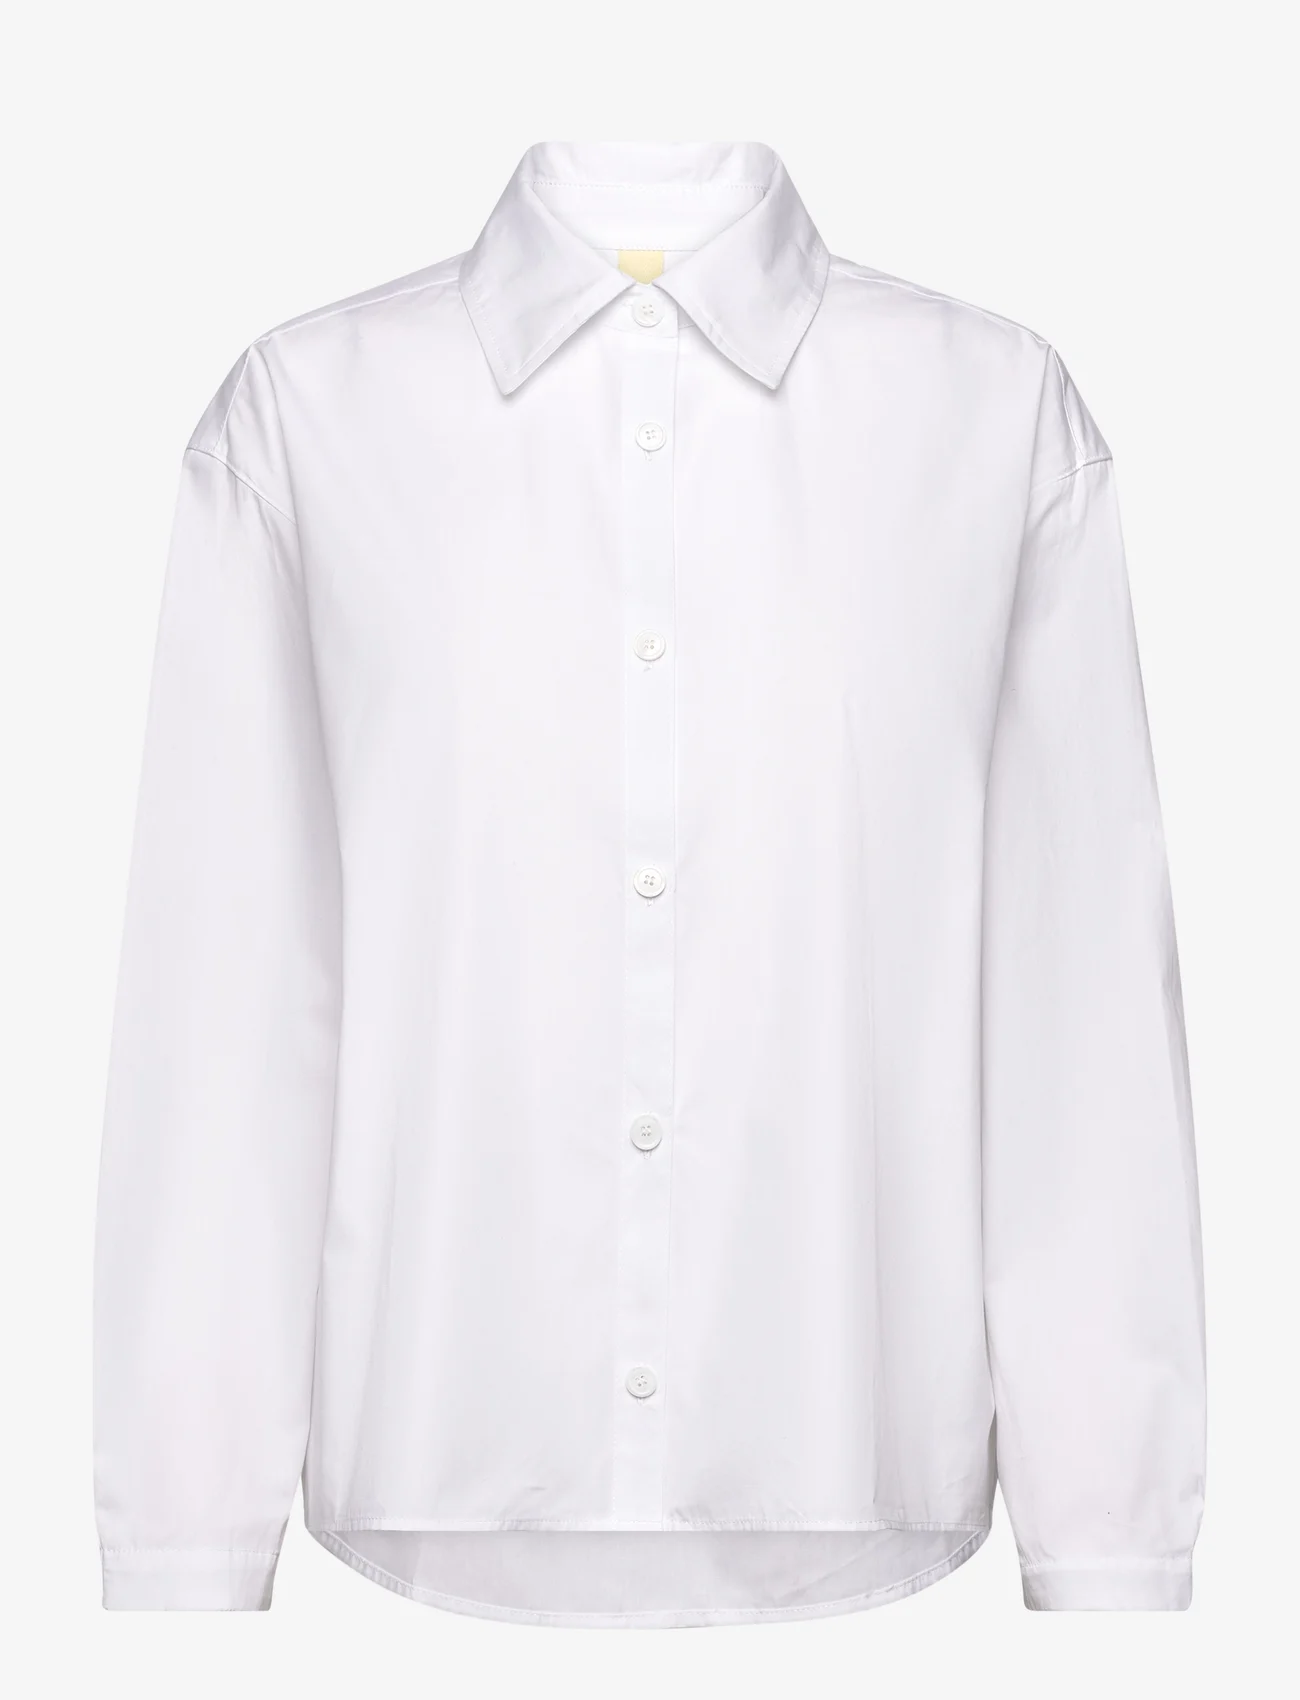 Brixtol Textiles - Stella - long-sleeved shirts - optic white - 0